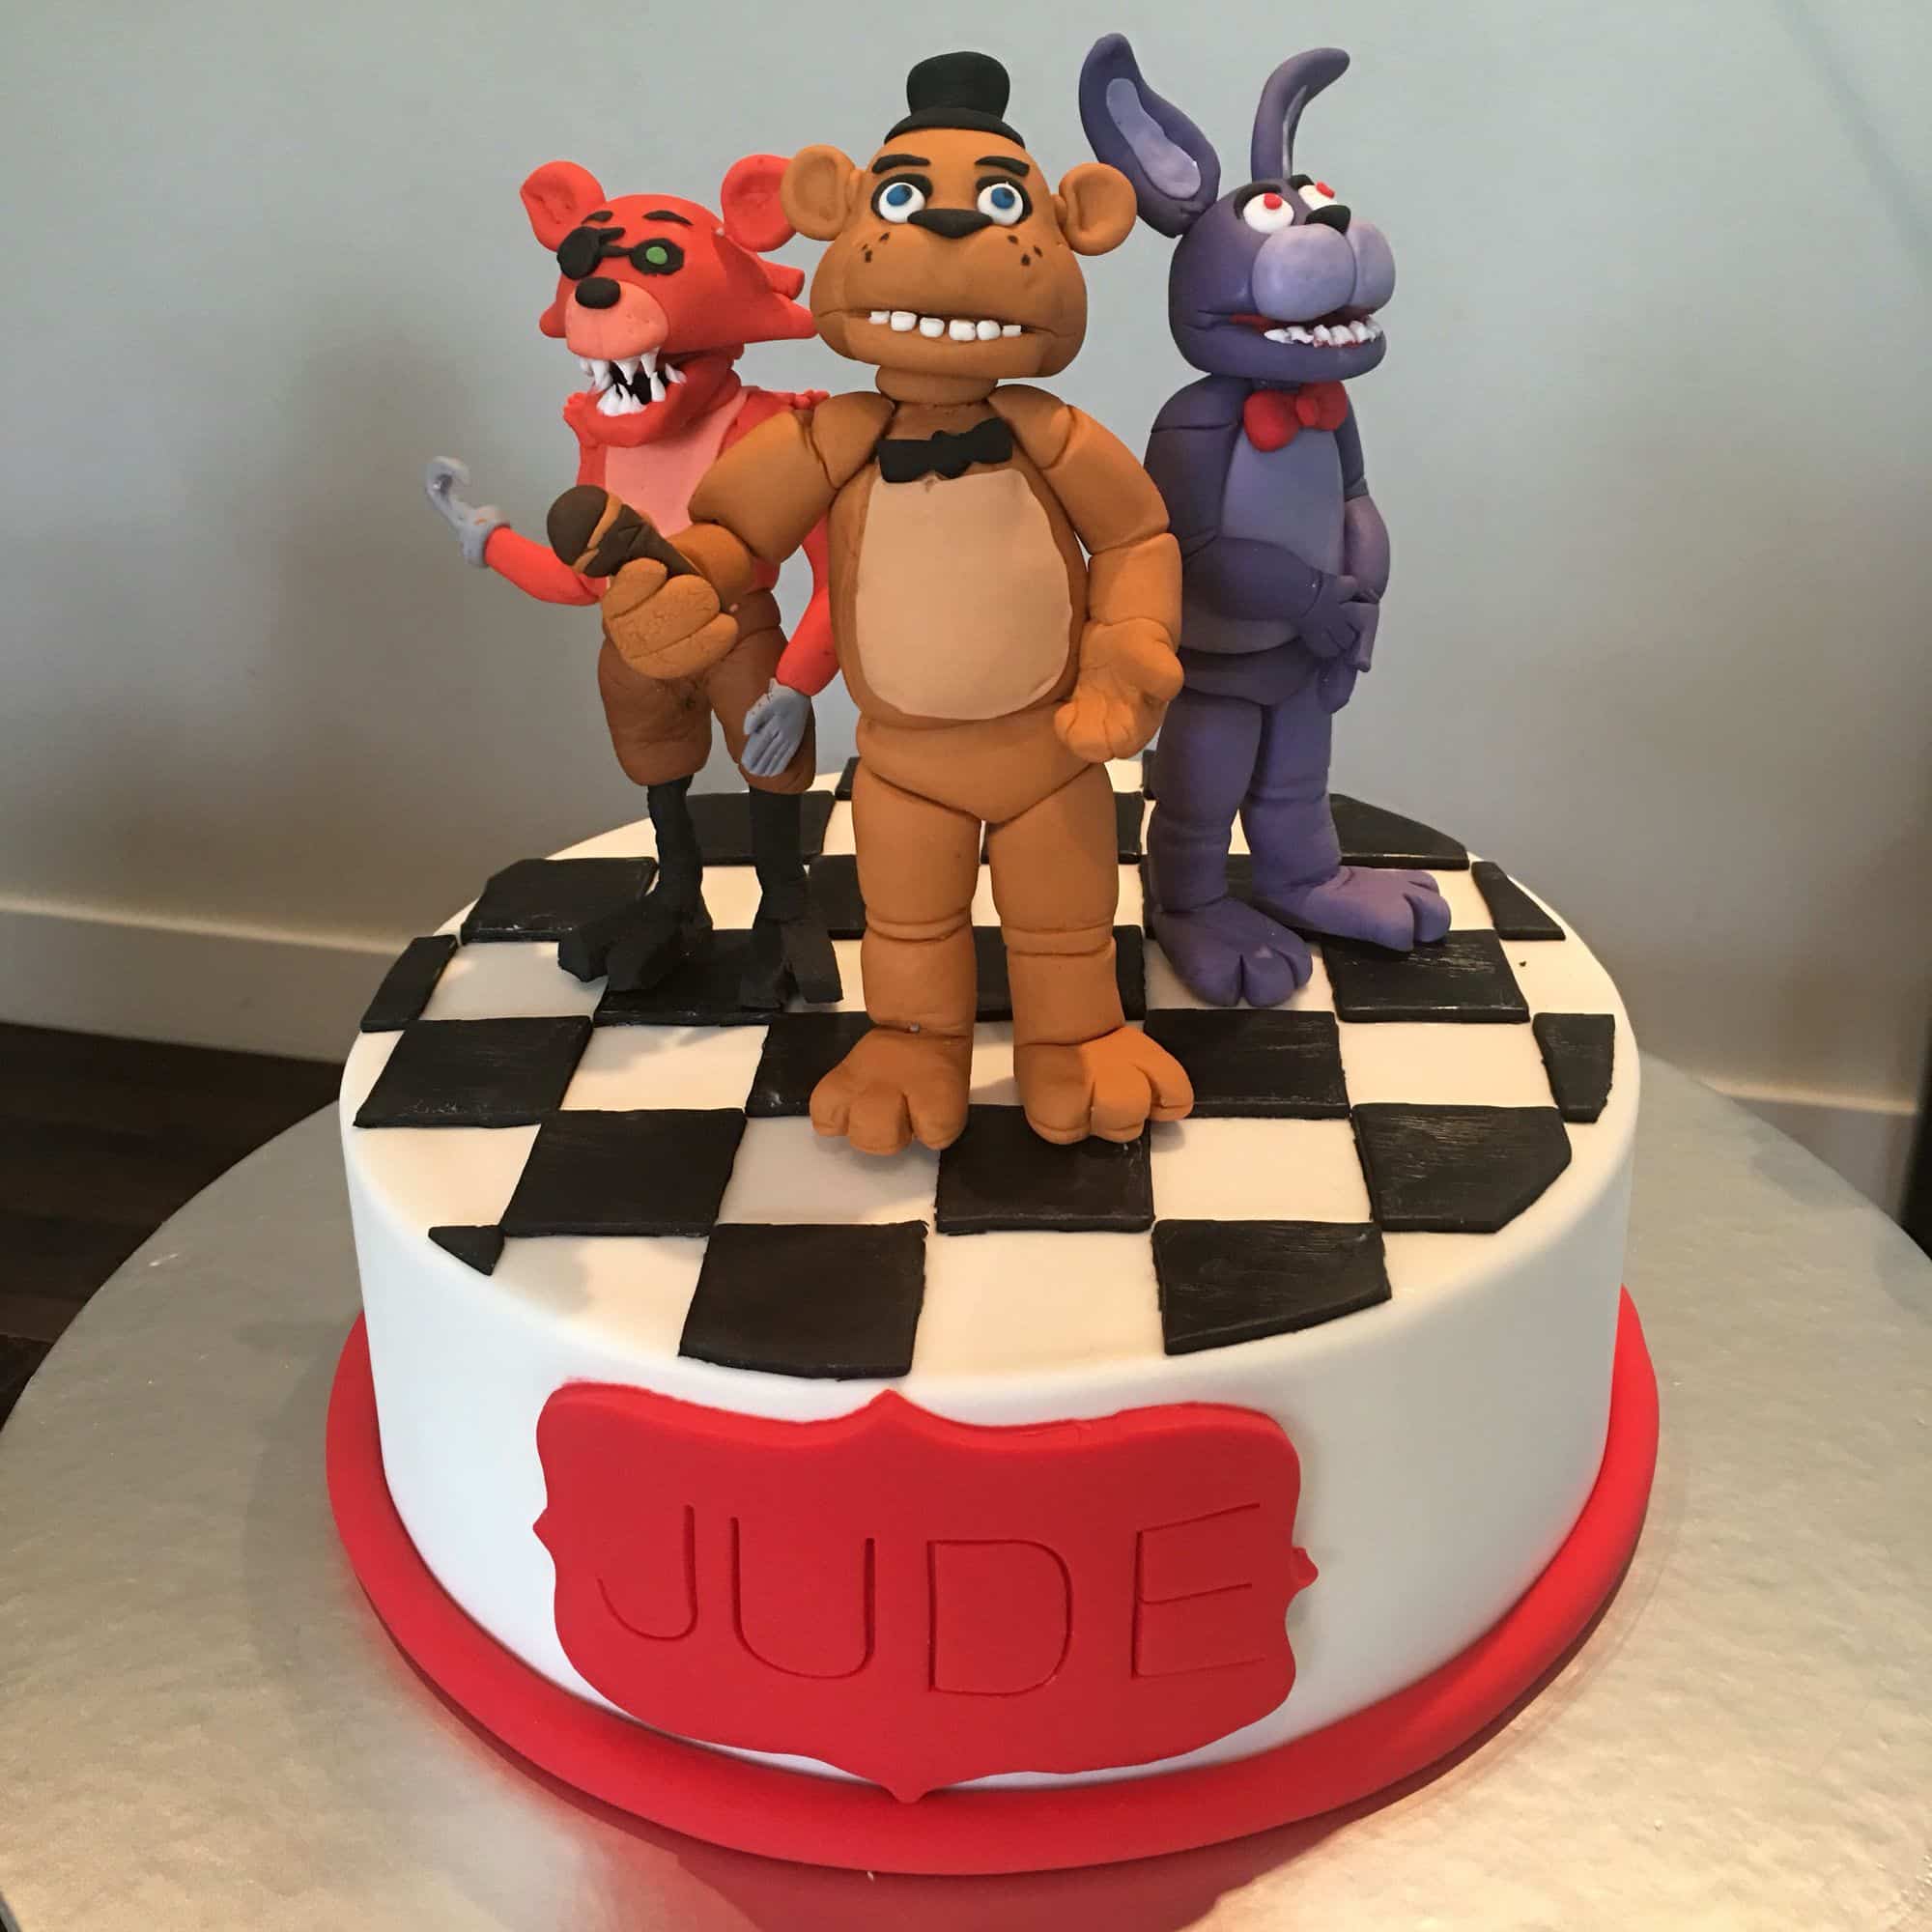 Five Nights At Freddys Birthday Cake Ideas / Five Nights At Freddys ...